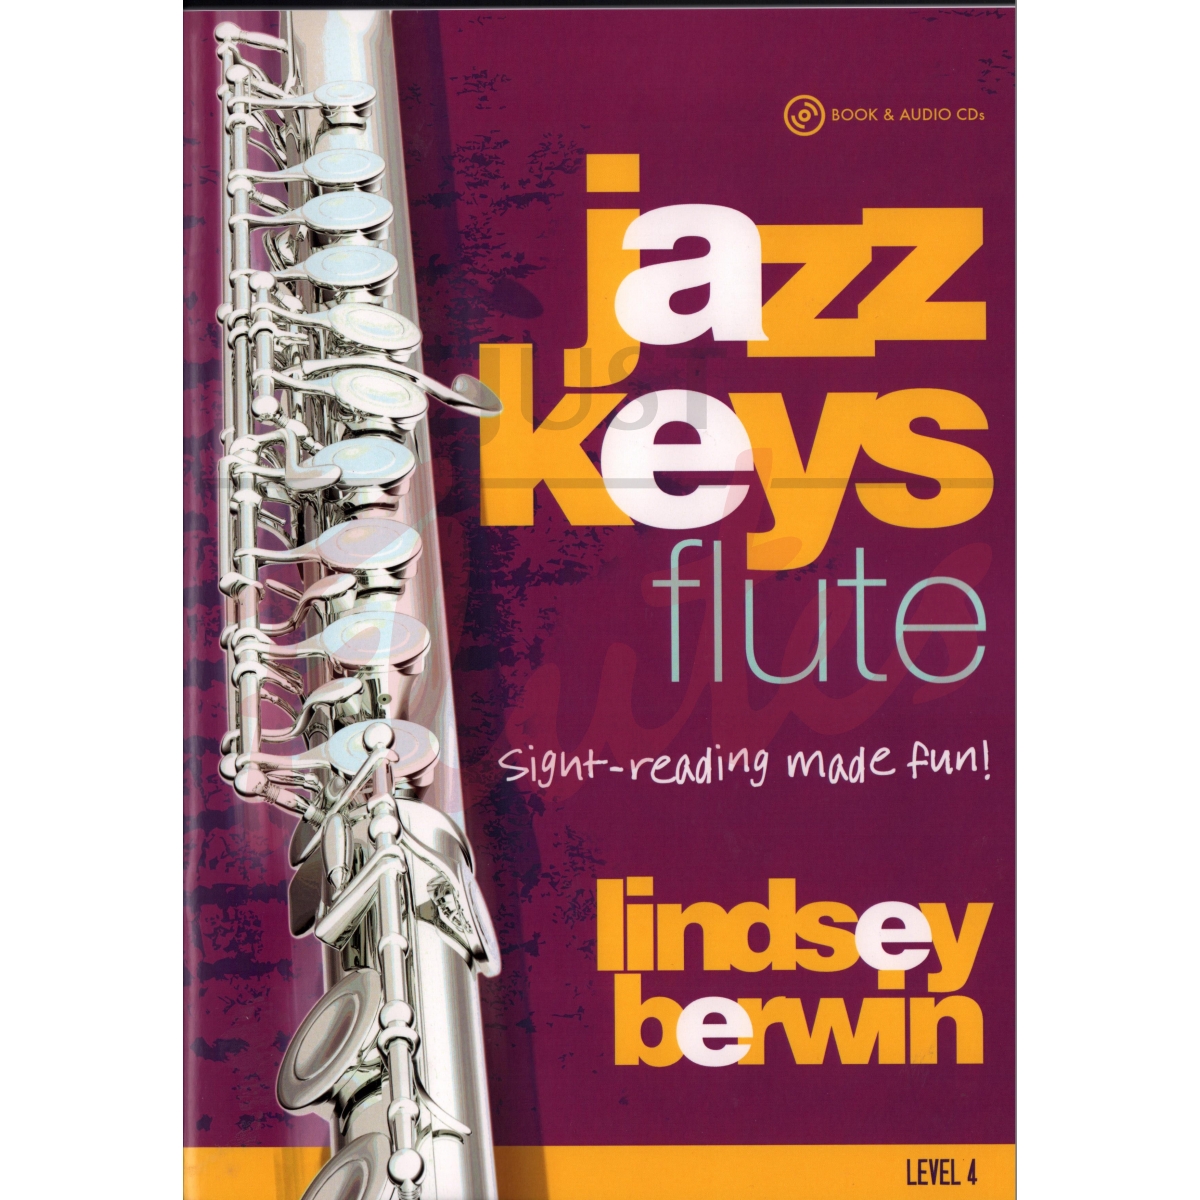 Jazz Keys Flute Level 4 Sight-Reading Made Fun!